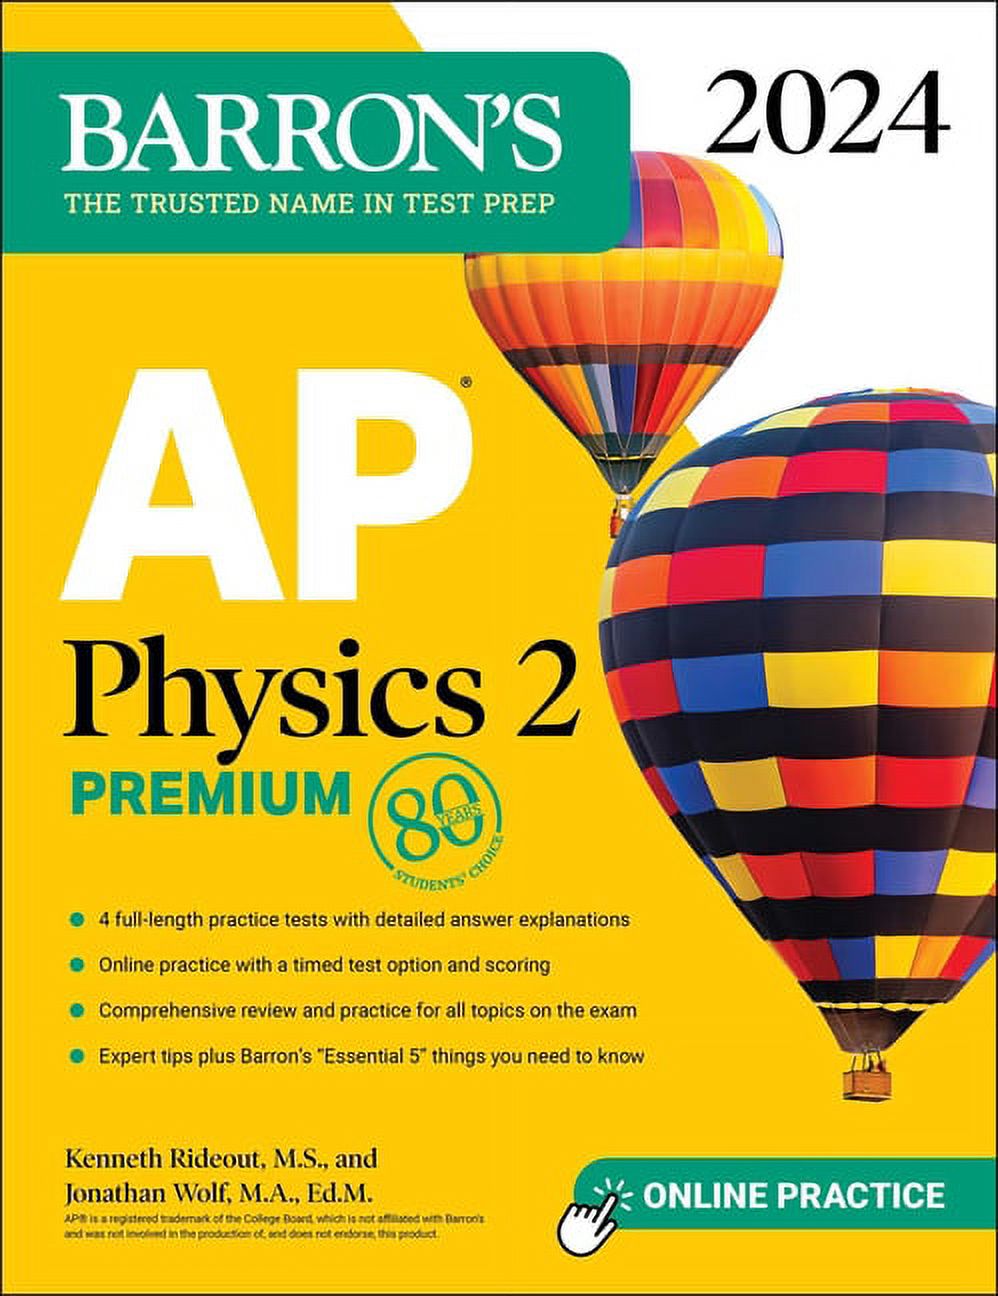 Physics　Review　Online　Practice　Practice　Barron's　2024:　Premium,　Comprehensive　AP:　(Paperback)　AP　Tests